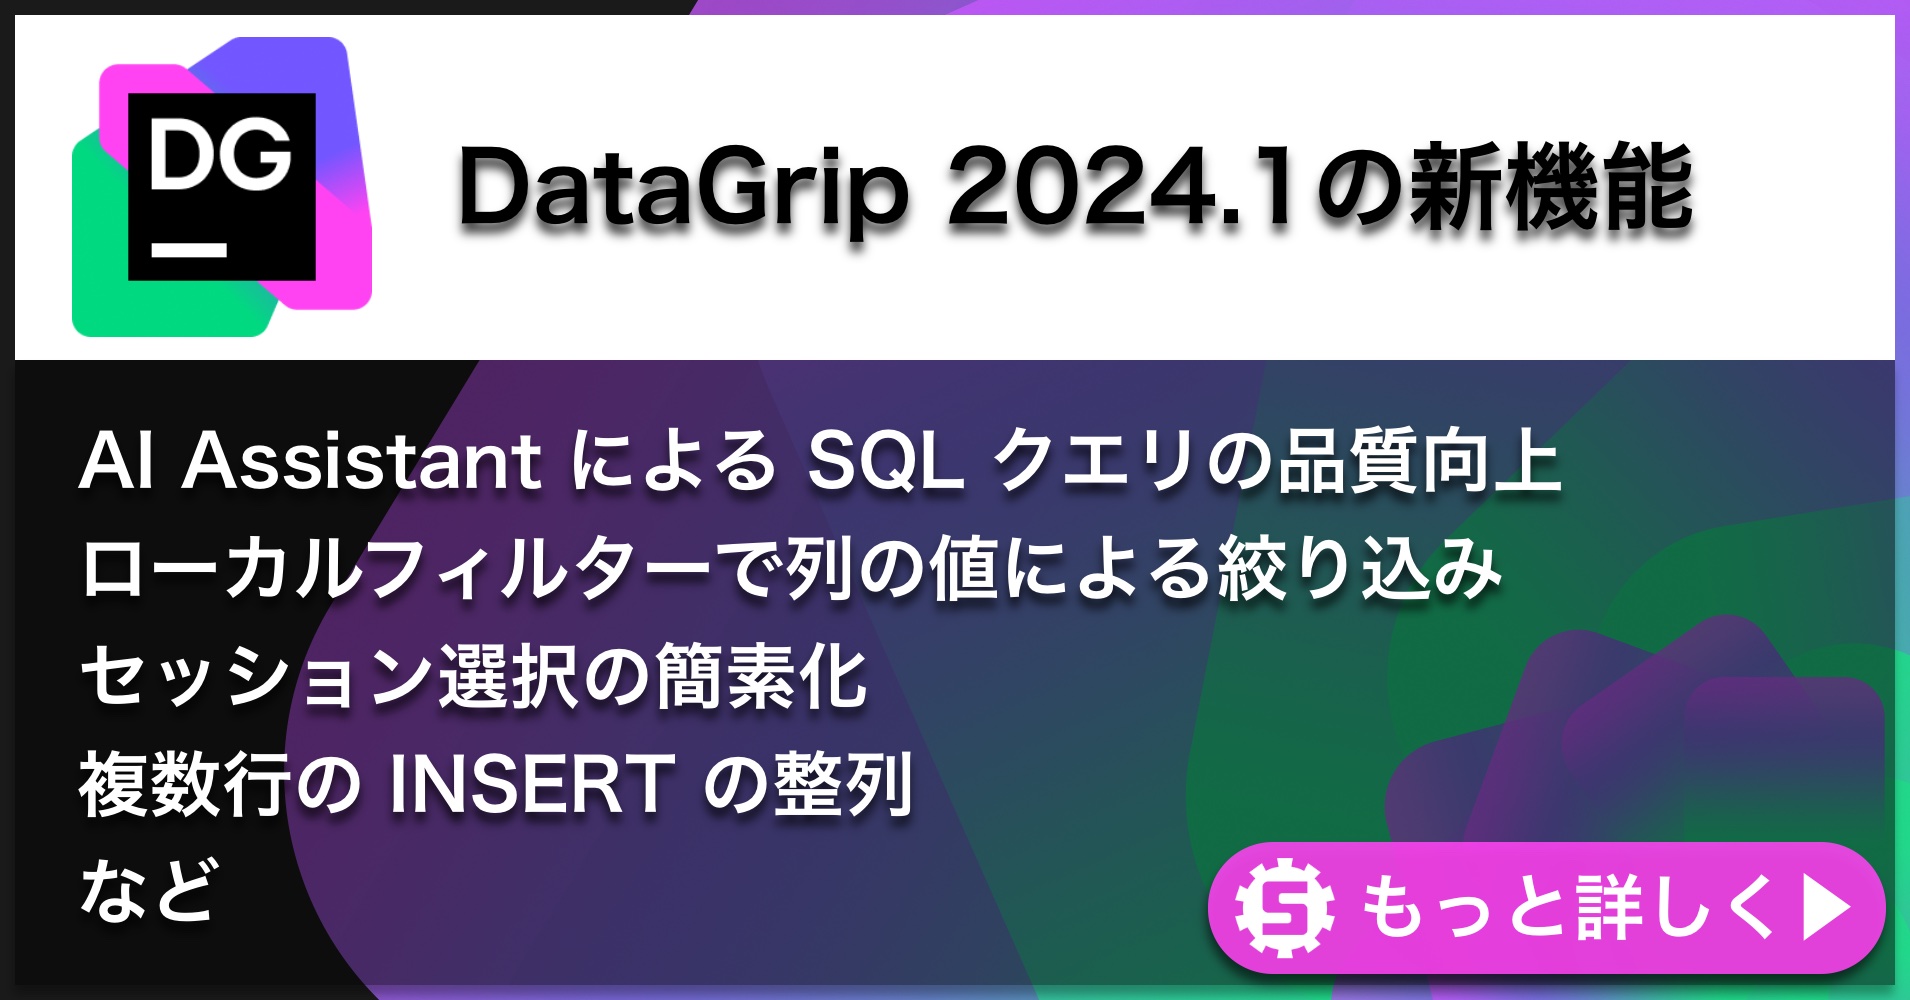 DataGrip 2024.1の新機能